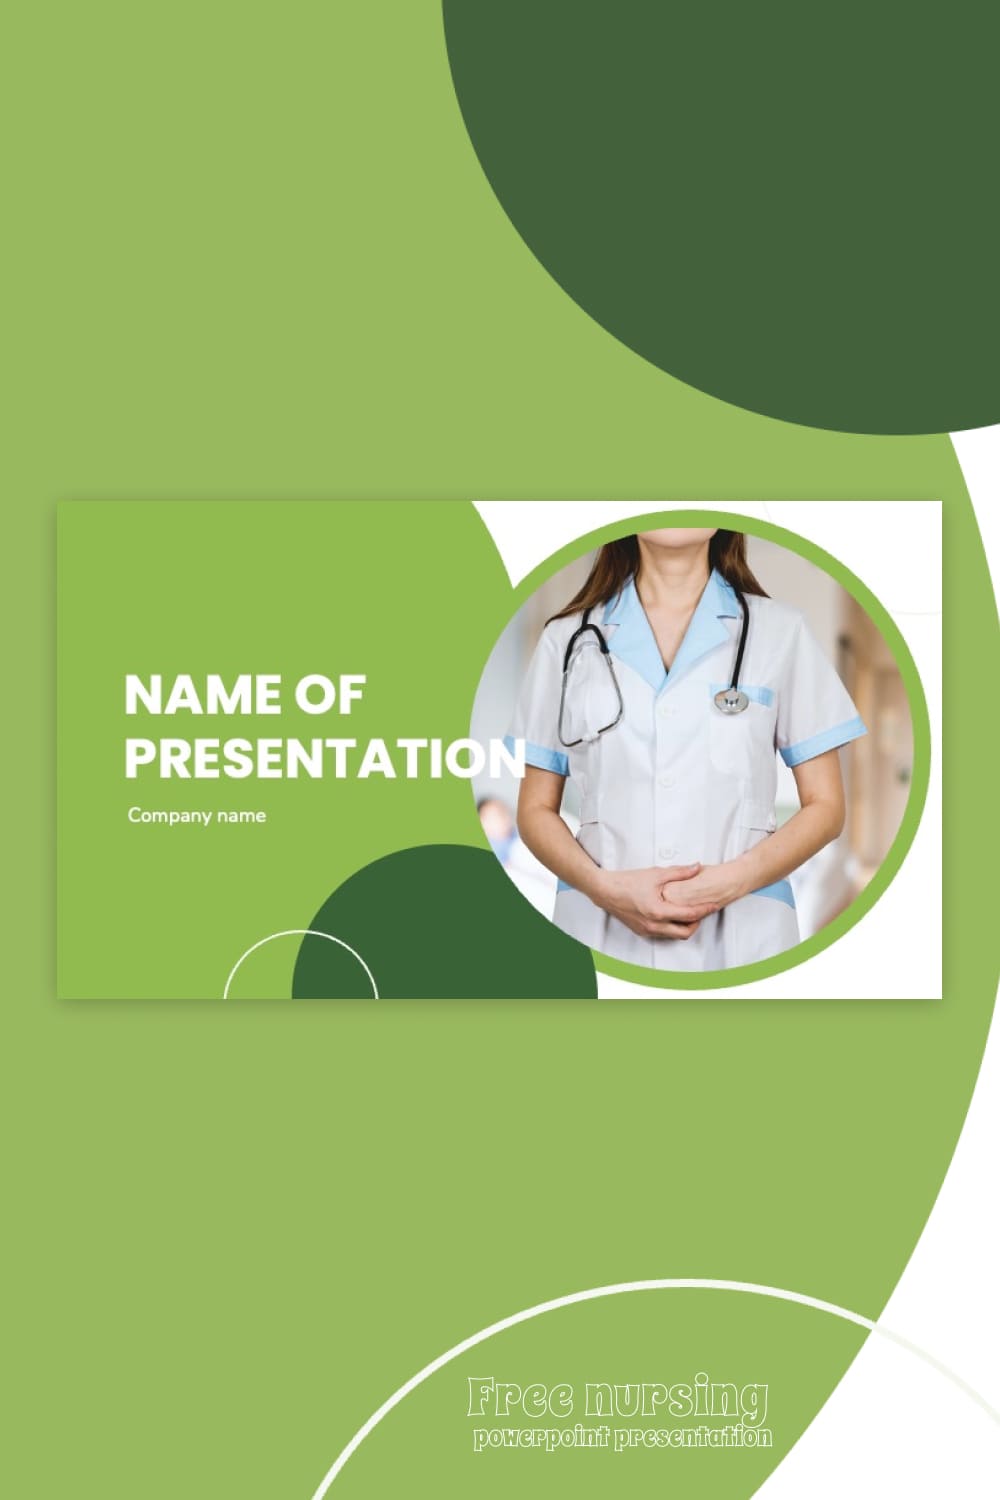 Free Nursing Powerpoint Presentation Pinterest.